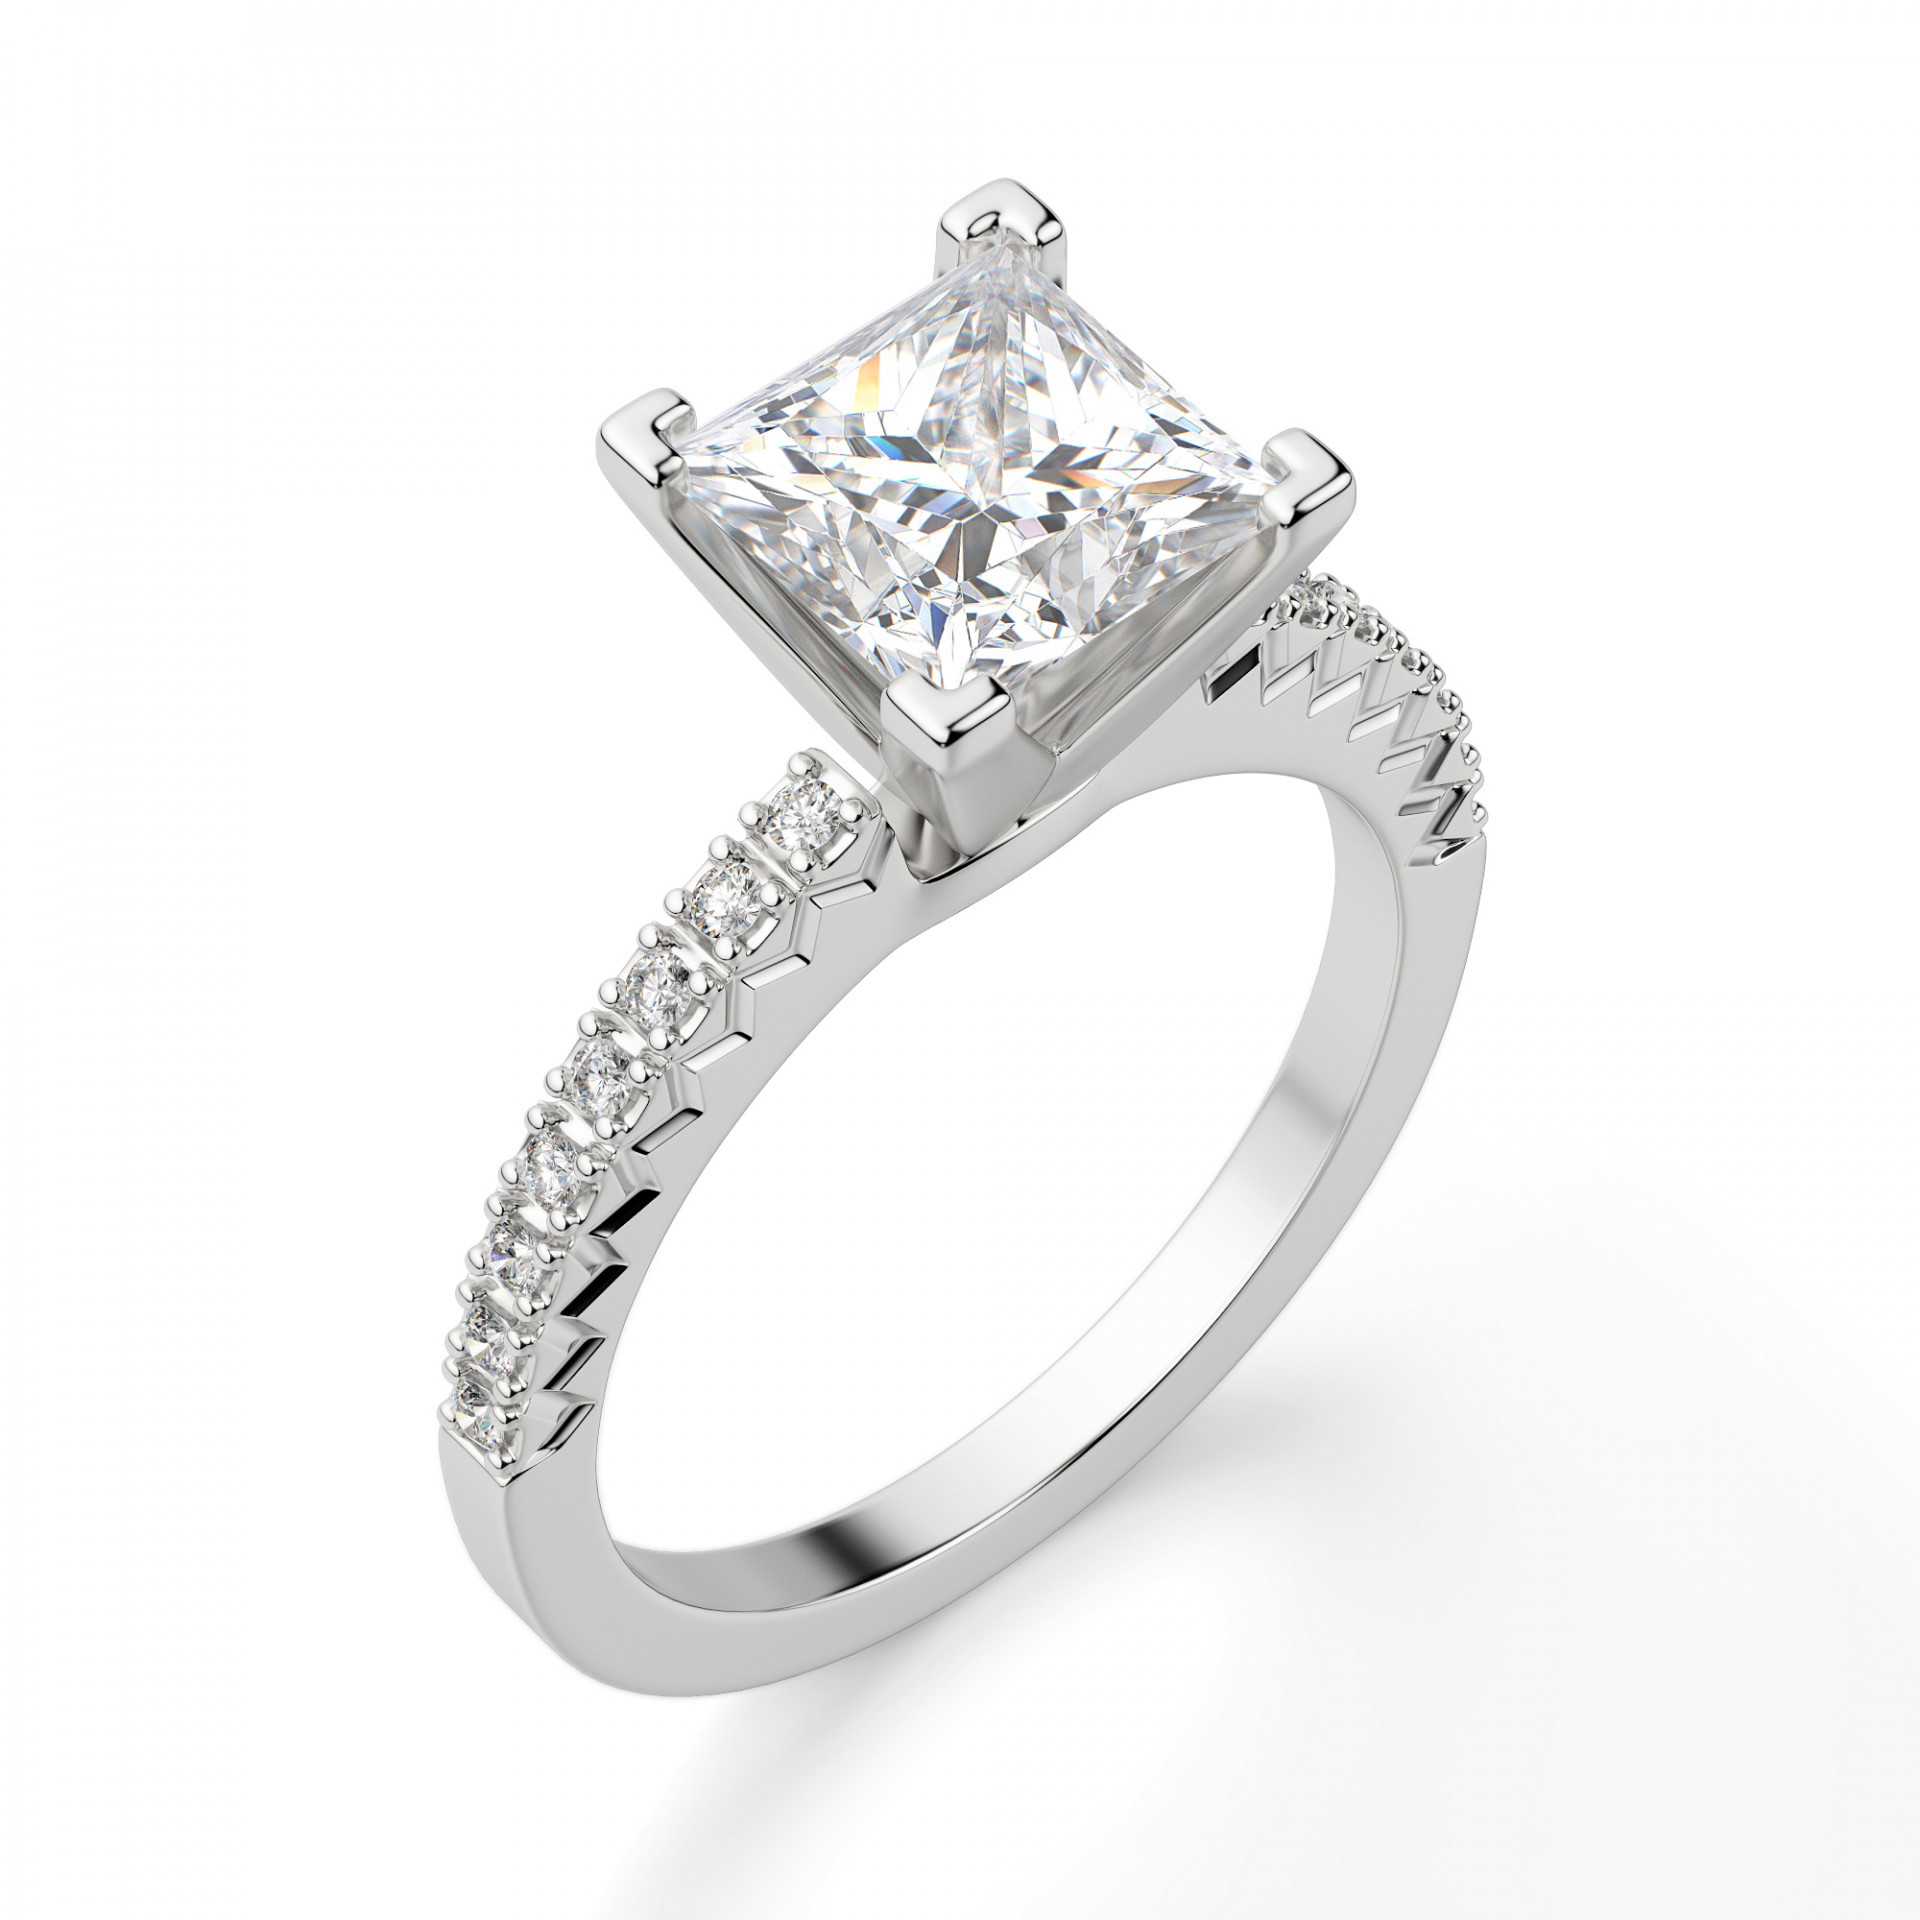 Princess Cut Wedding Rings
 Angelix Princess Cut Engagement Ring